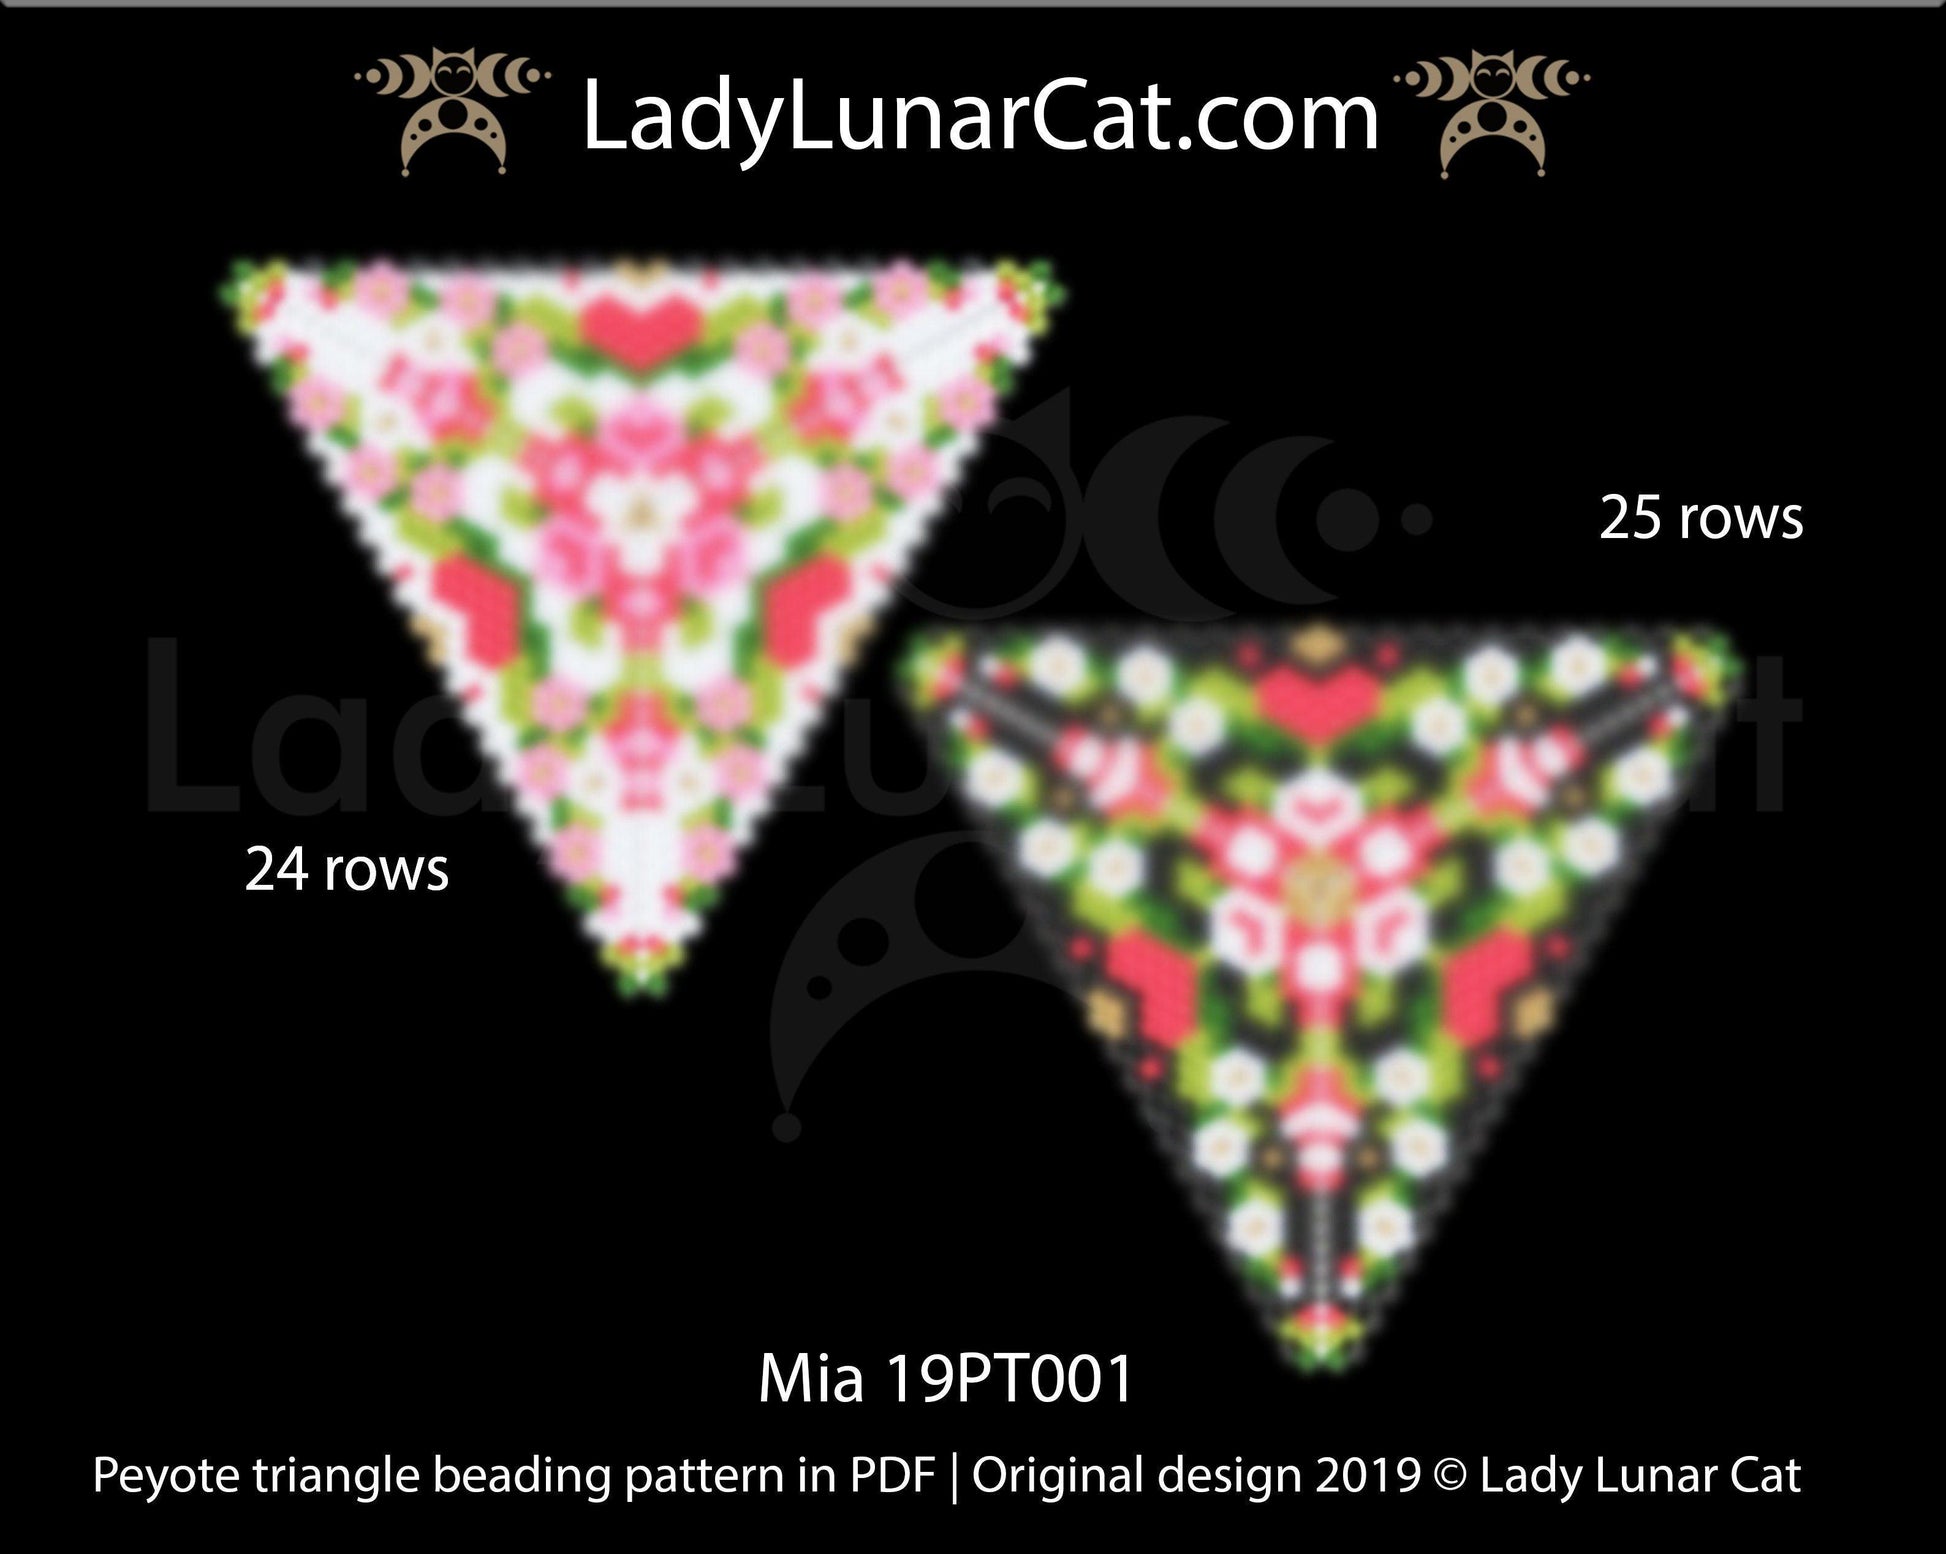 Peyote triangle pattern for beading Mia 19PT001 LadyLunarCat